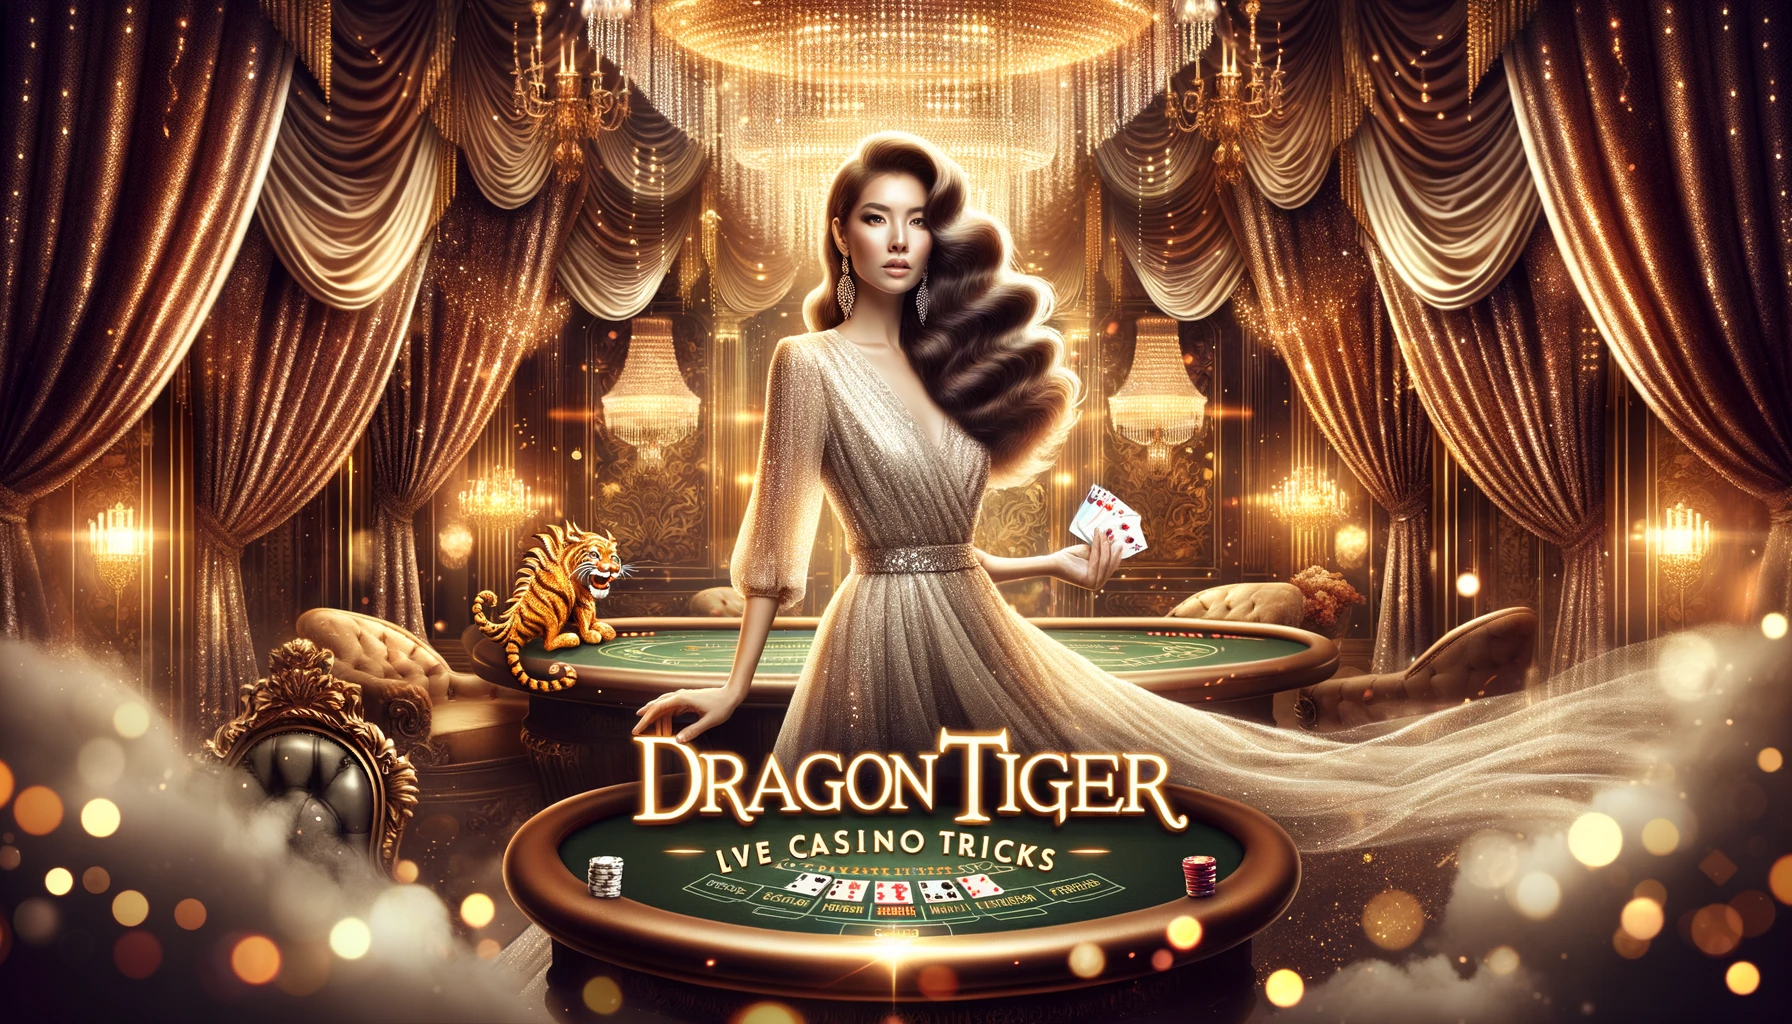 Dragon Tiger Live Casino Tricks, Dragon Tiger online casino